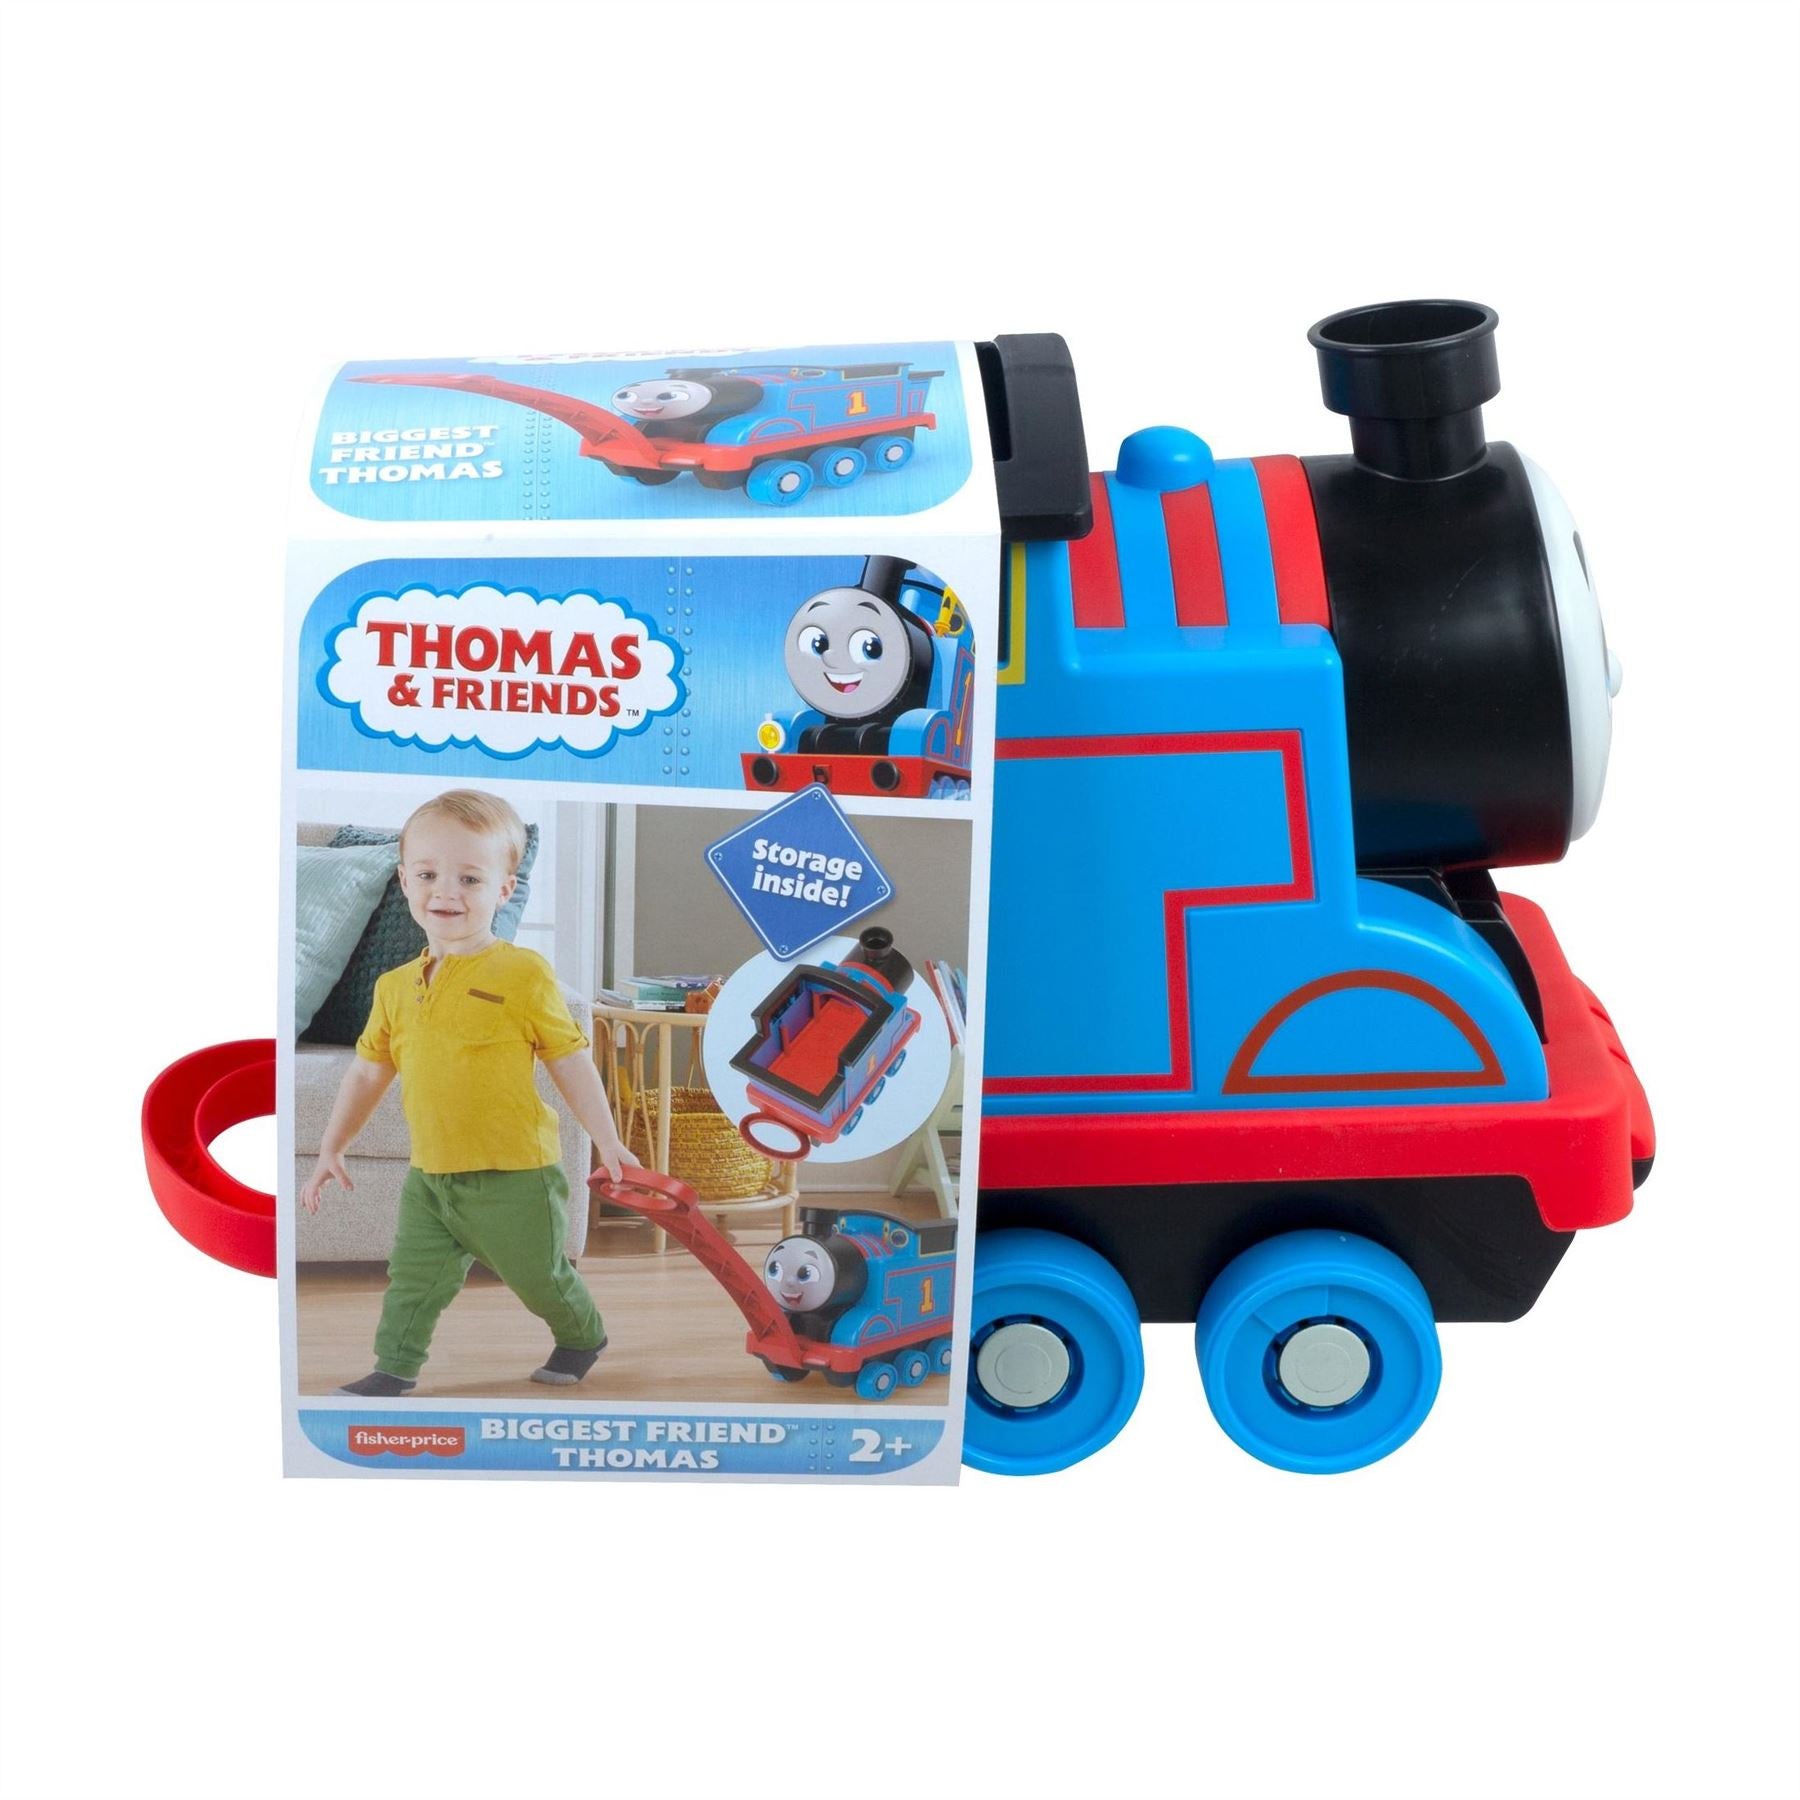 Thomas the Tank Engine Biggest Friend